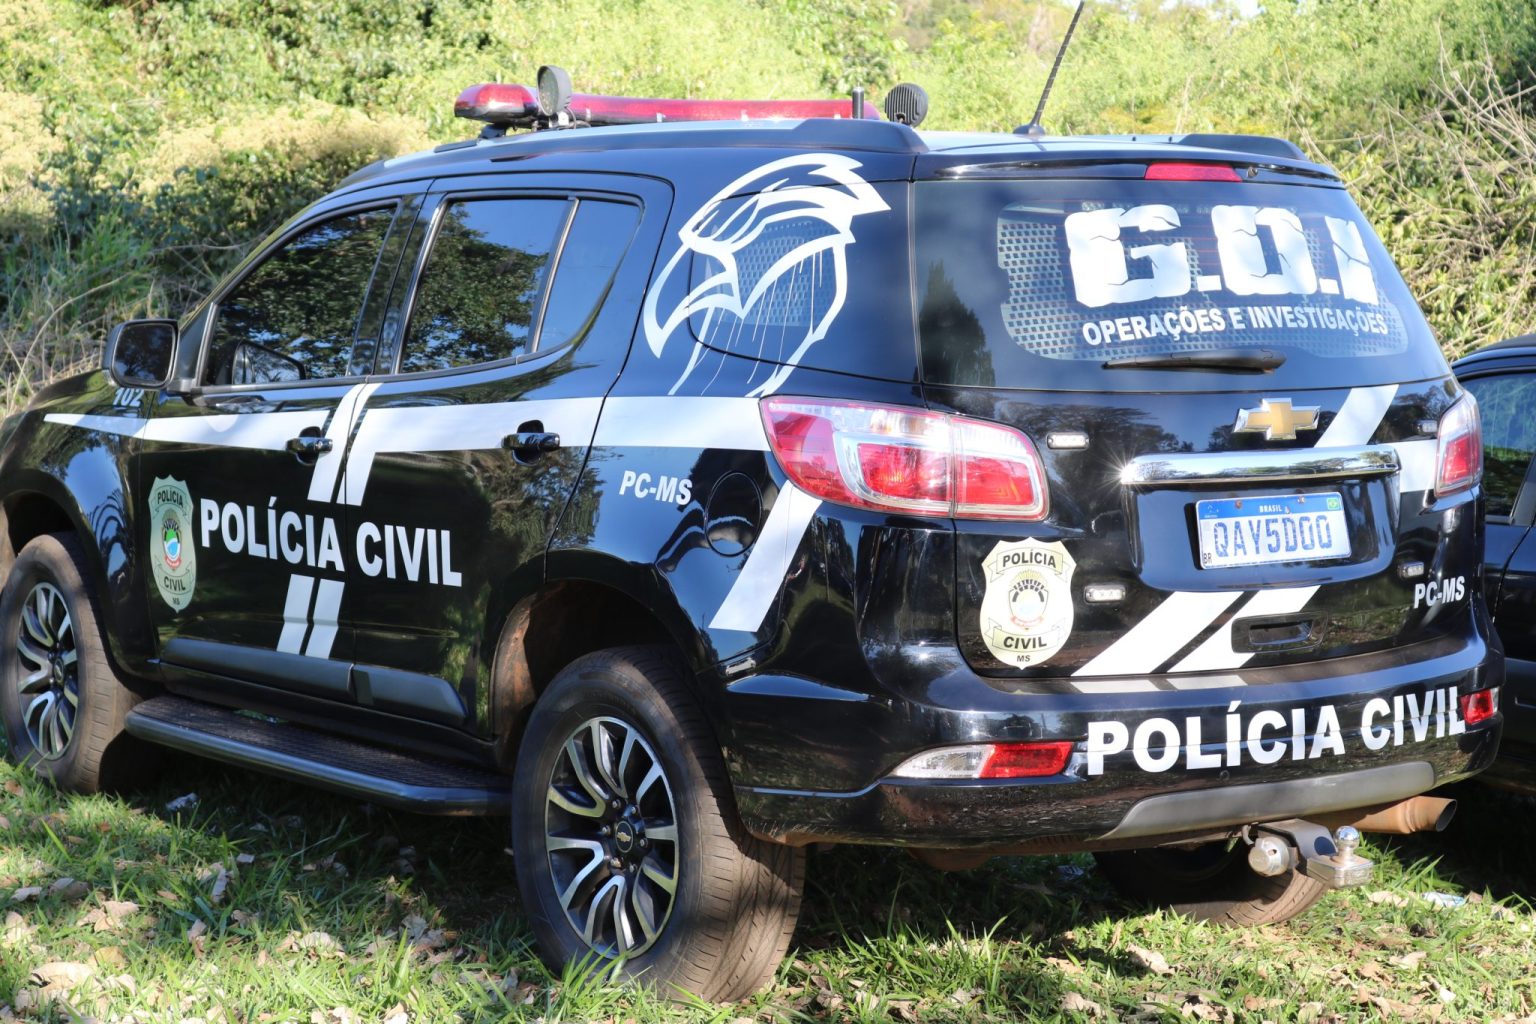 Guaicurus News - Polícia Civil prende em flagrante indivíduo por homicídio em Campo Grande